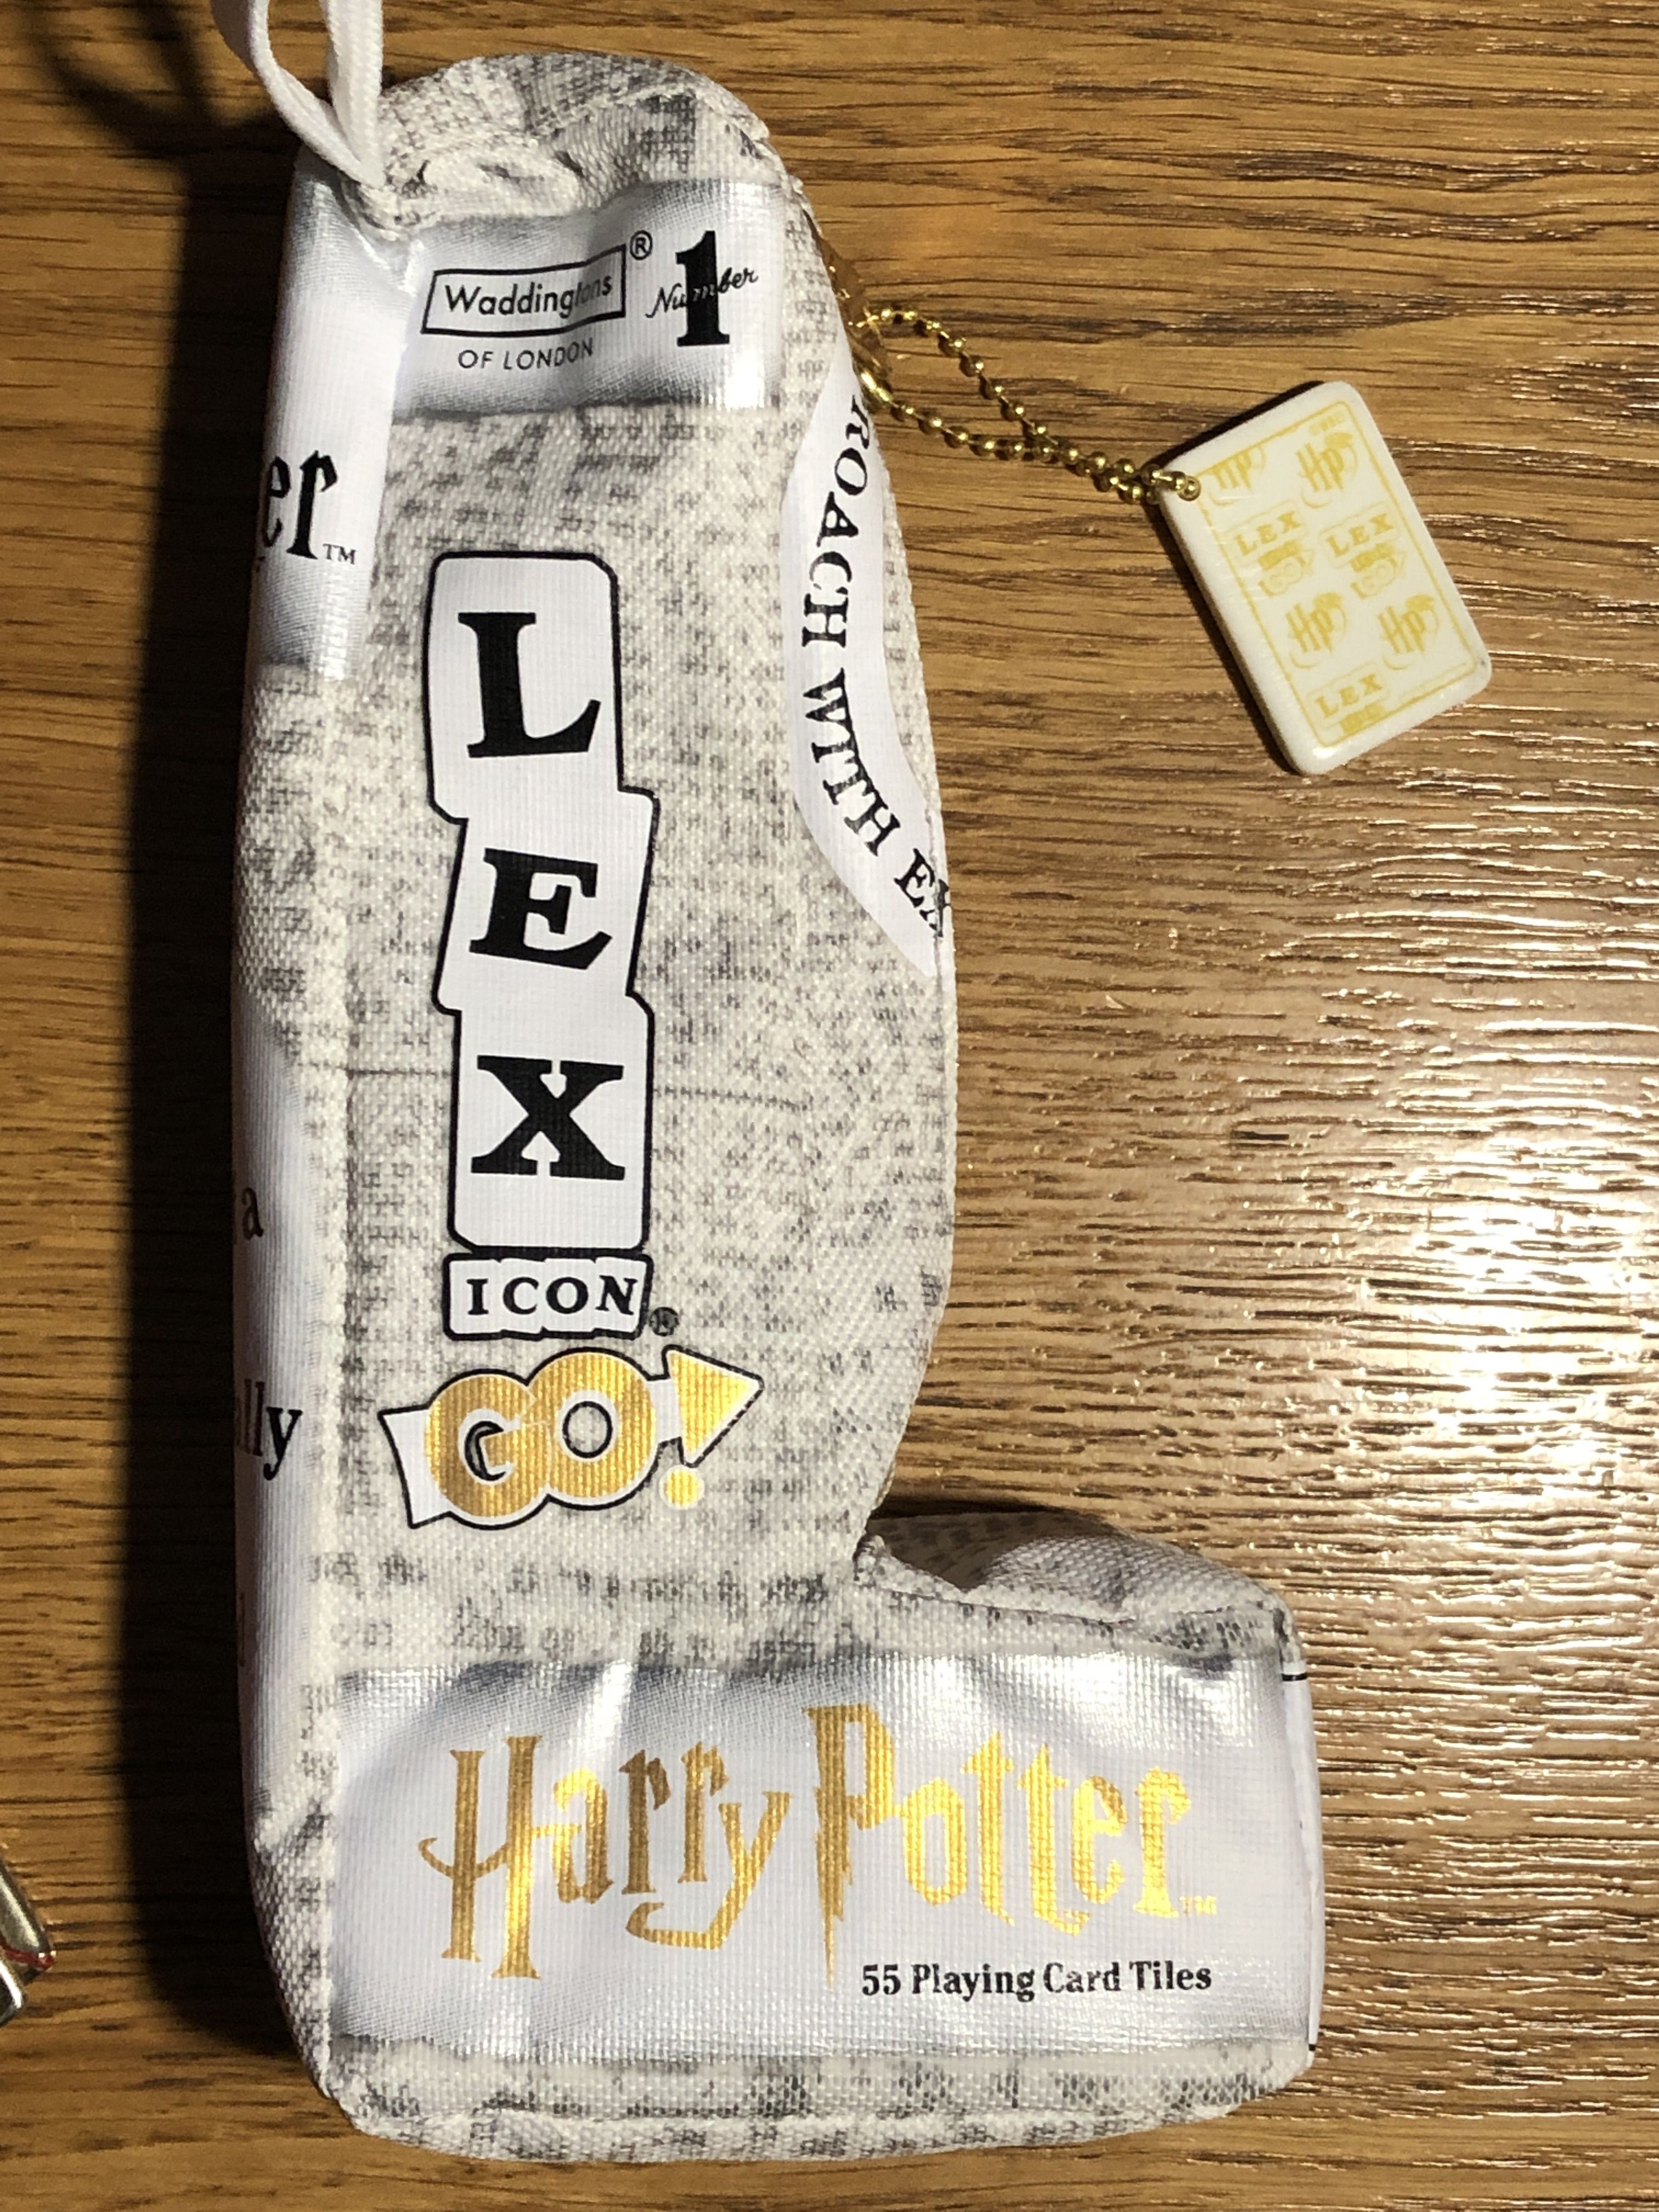 Lexicon Go: Harry Potter